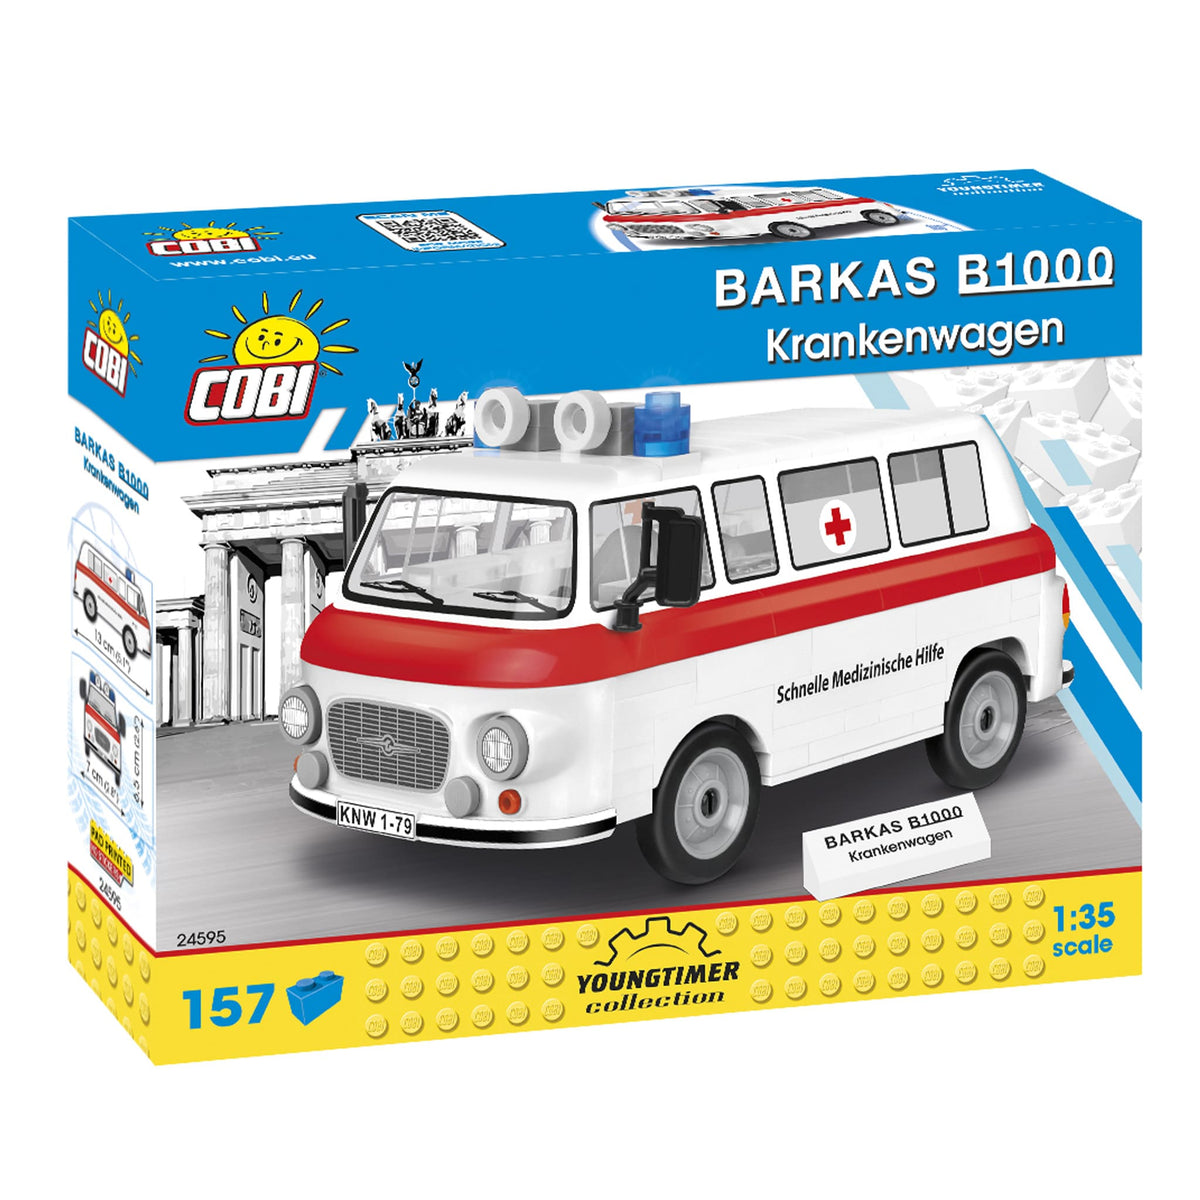 24595 Barkas B1000 Krankenwagen (Cobi)